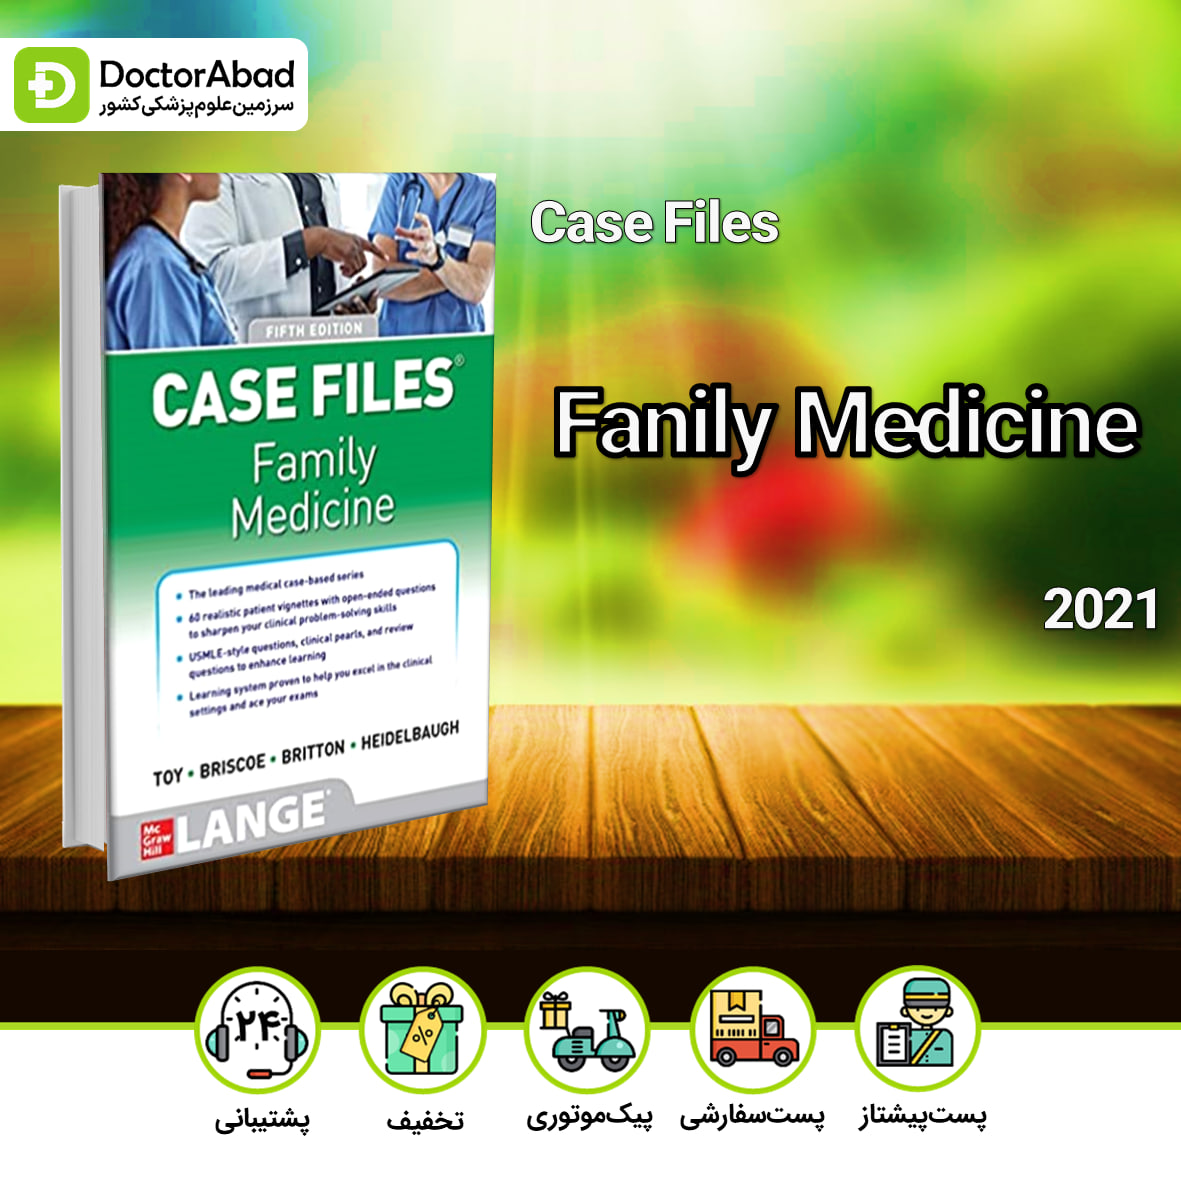 Case Files family medicine 2021